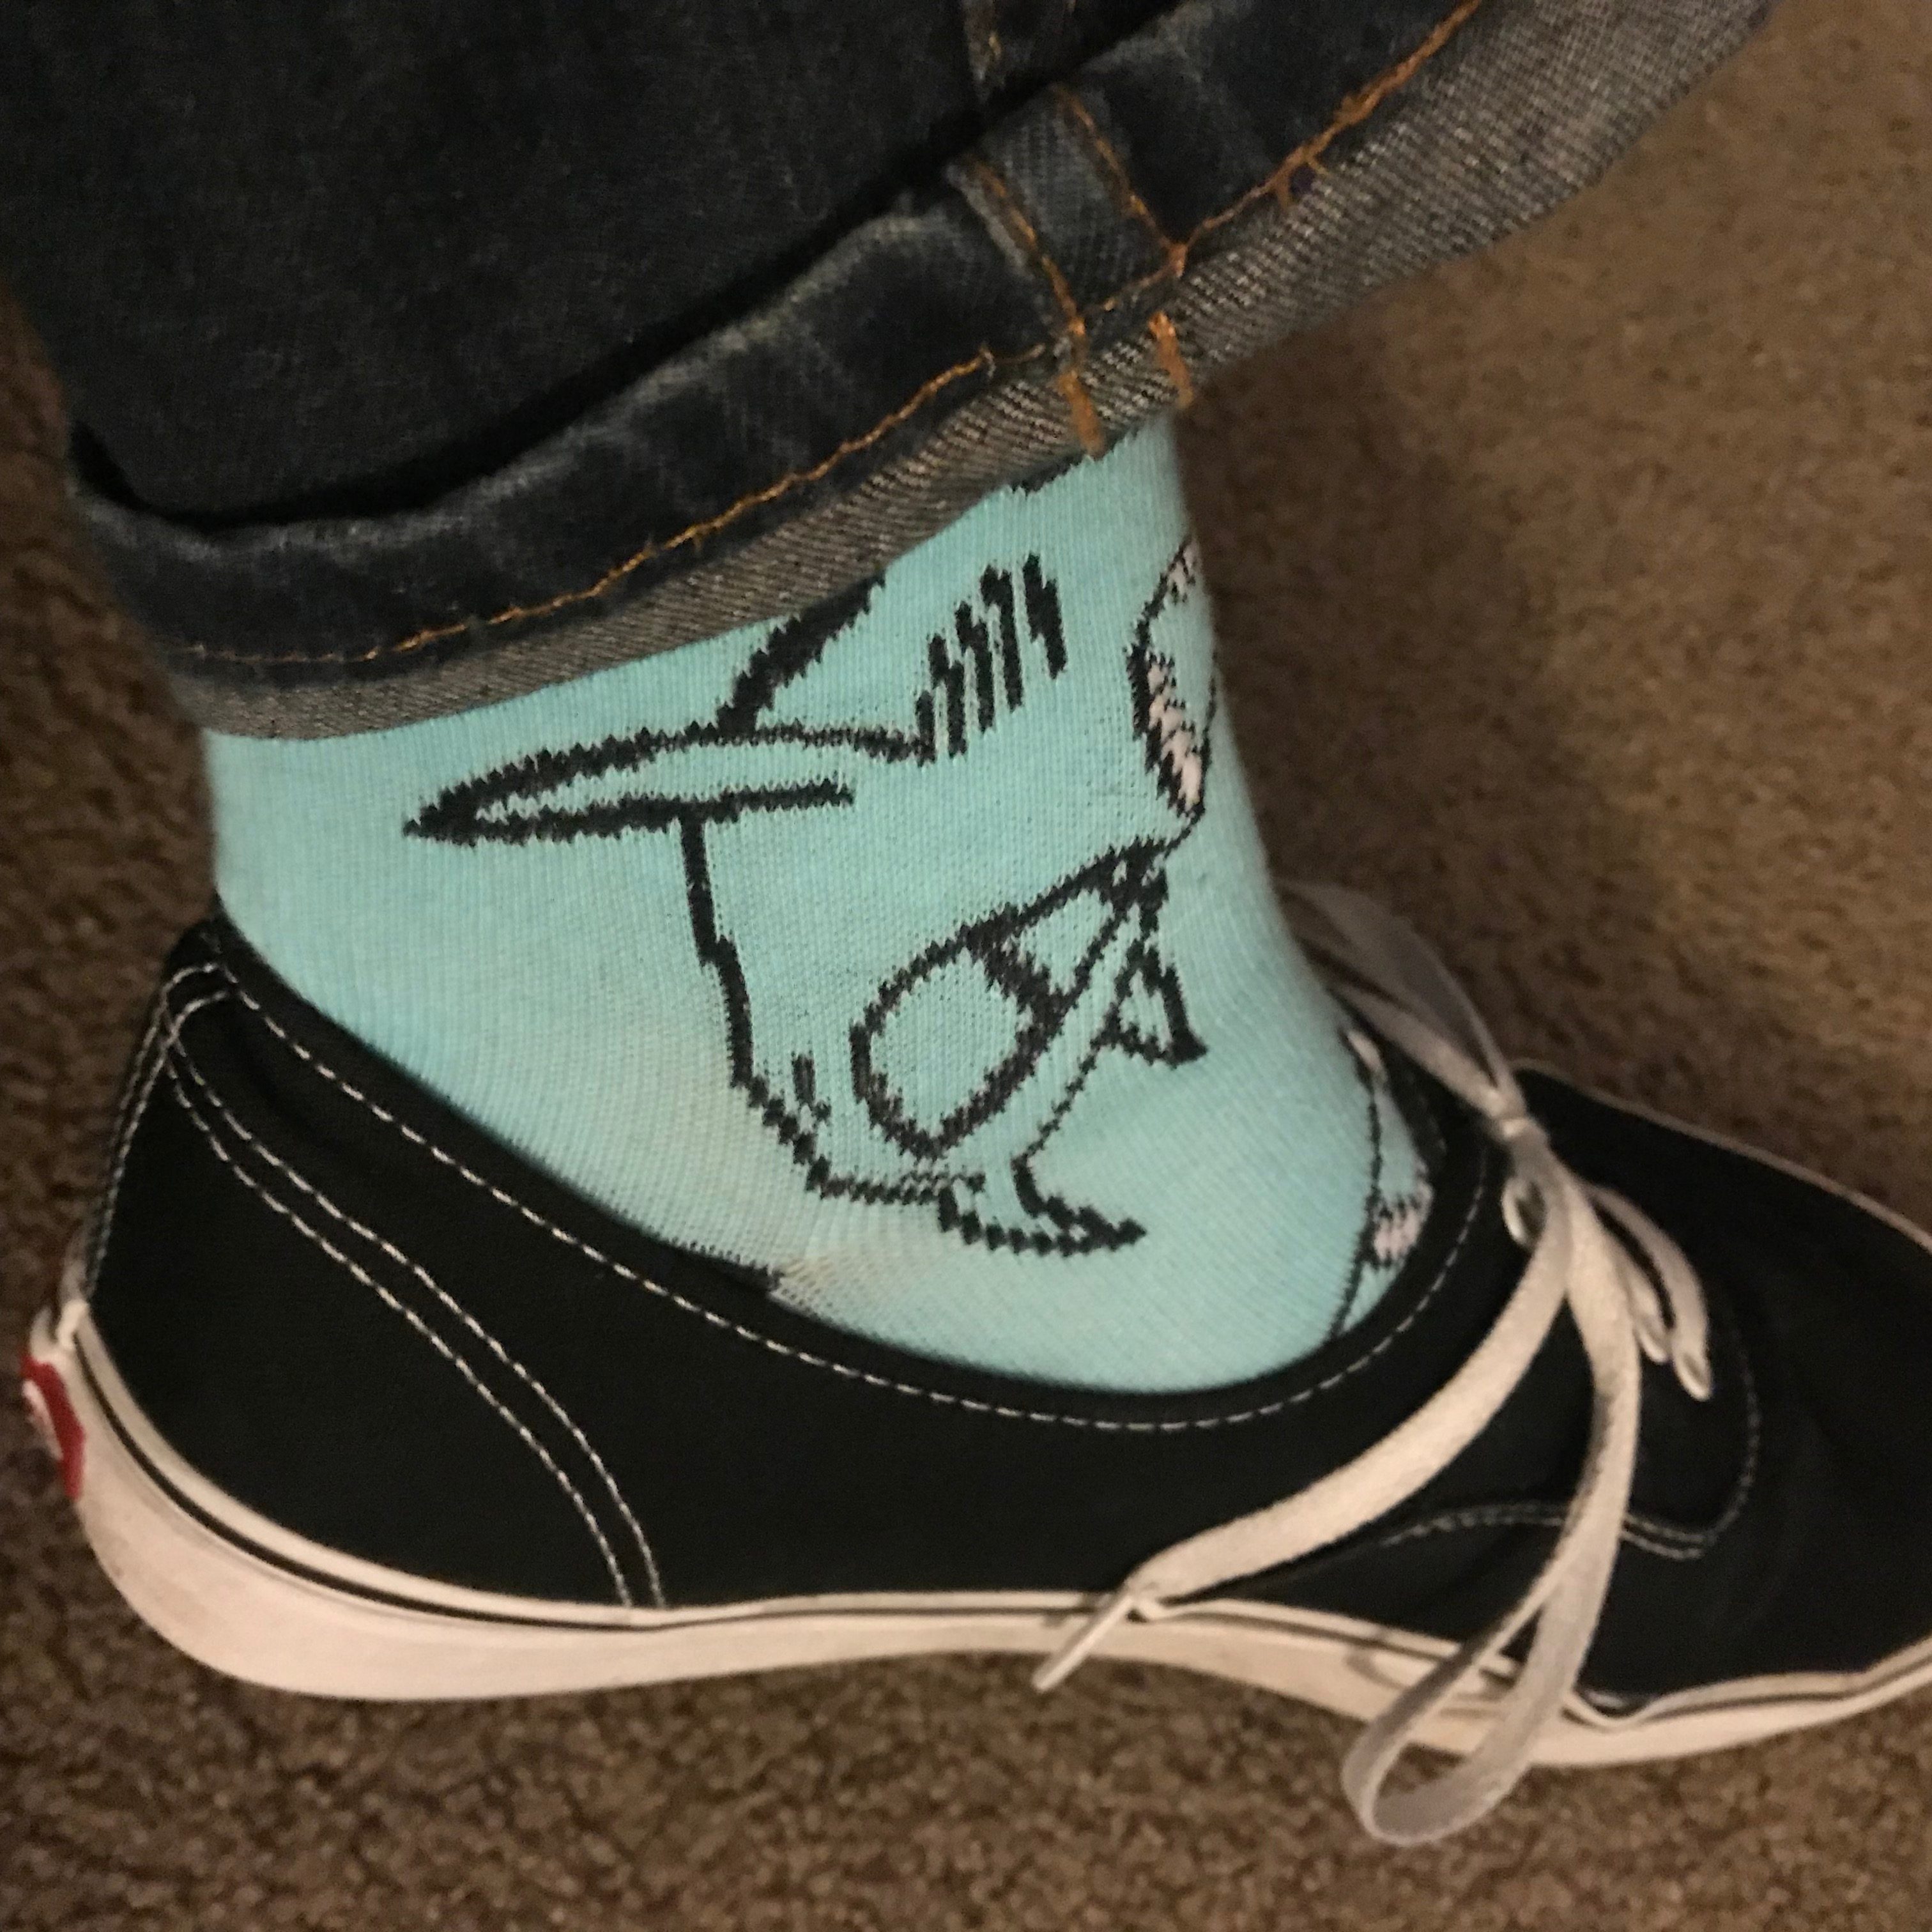 Ankle wearing cartoon shark print socks.